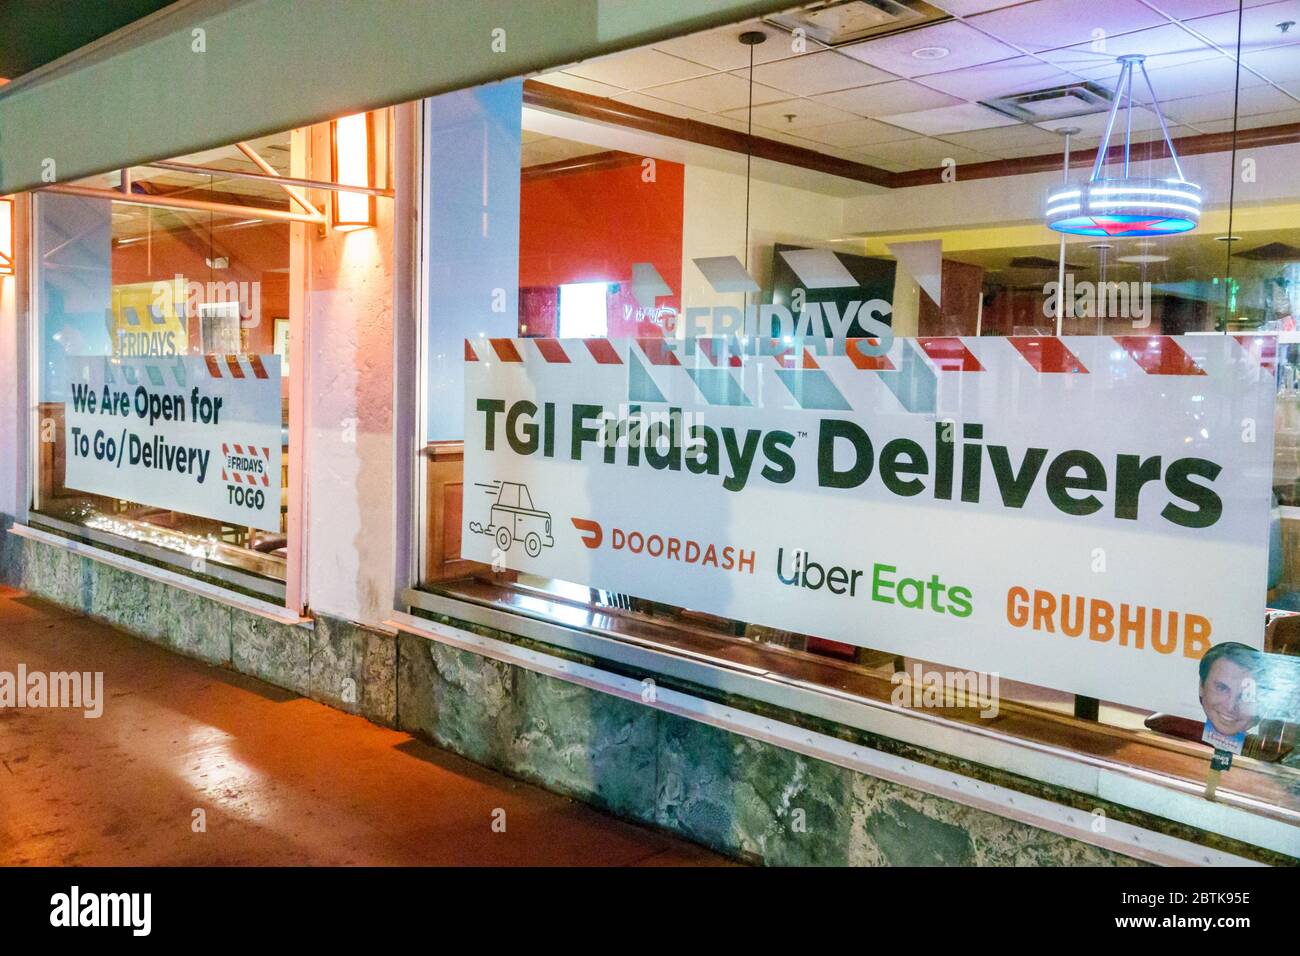 Miami Beach Florida,TGI Fridays, restaurant,takeout take-out delivery delivers to go sign,Doordash Uber Eats Grubhub,Covid-19 coronavirus pandemic cris Stock Photo